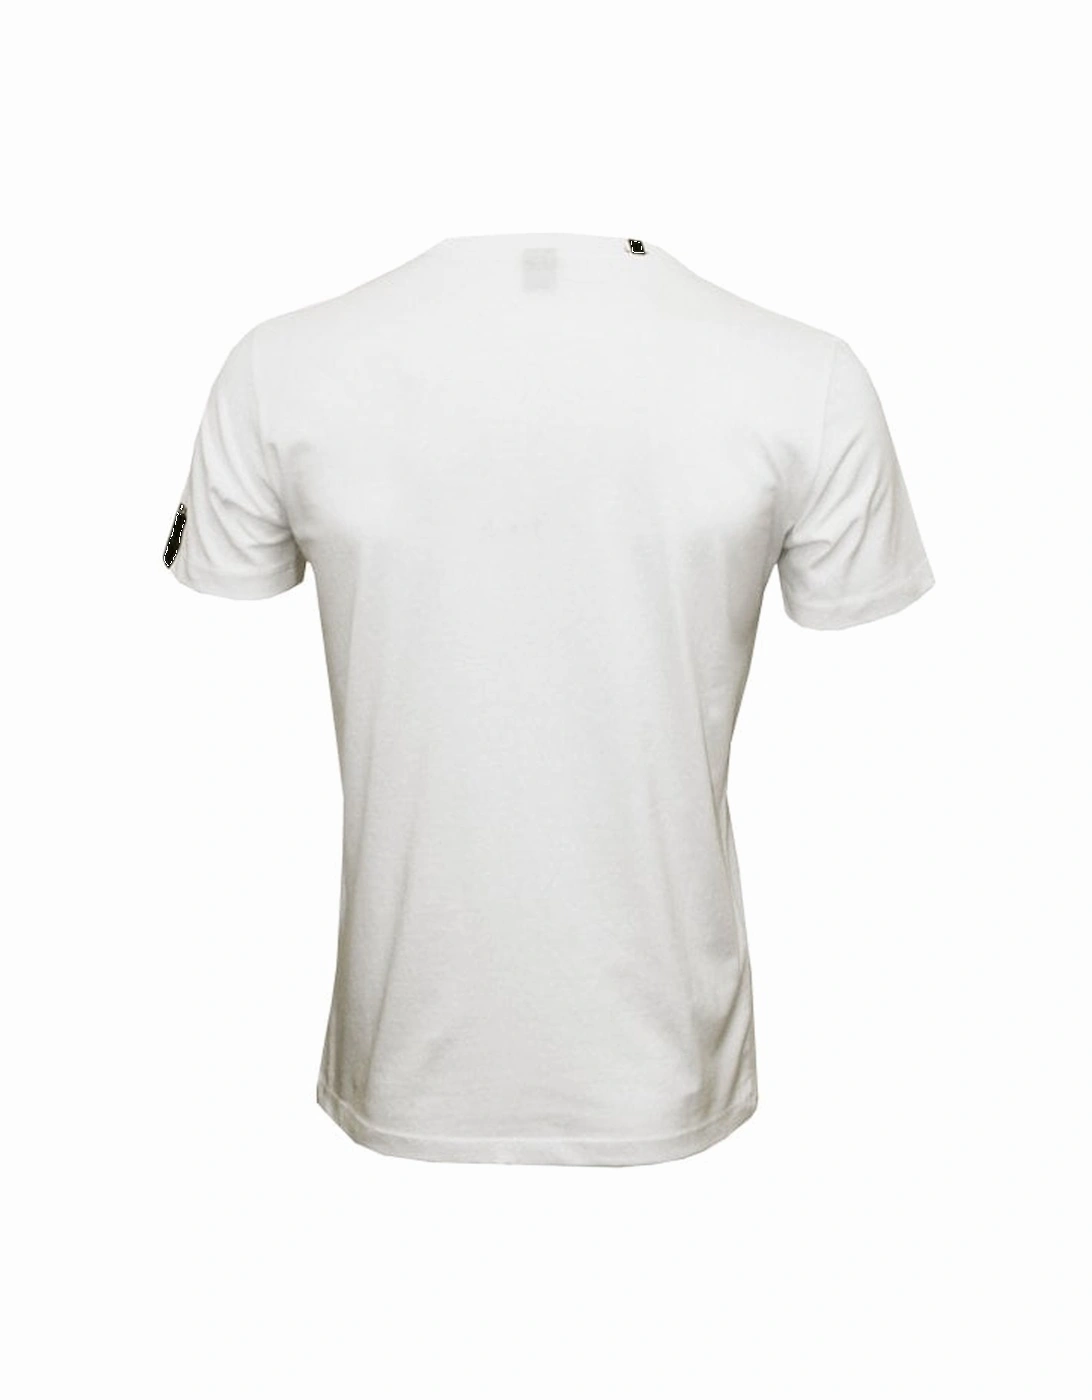 Motorcycle Helmet Print T-Shirt, White